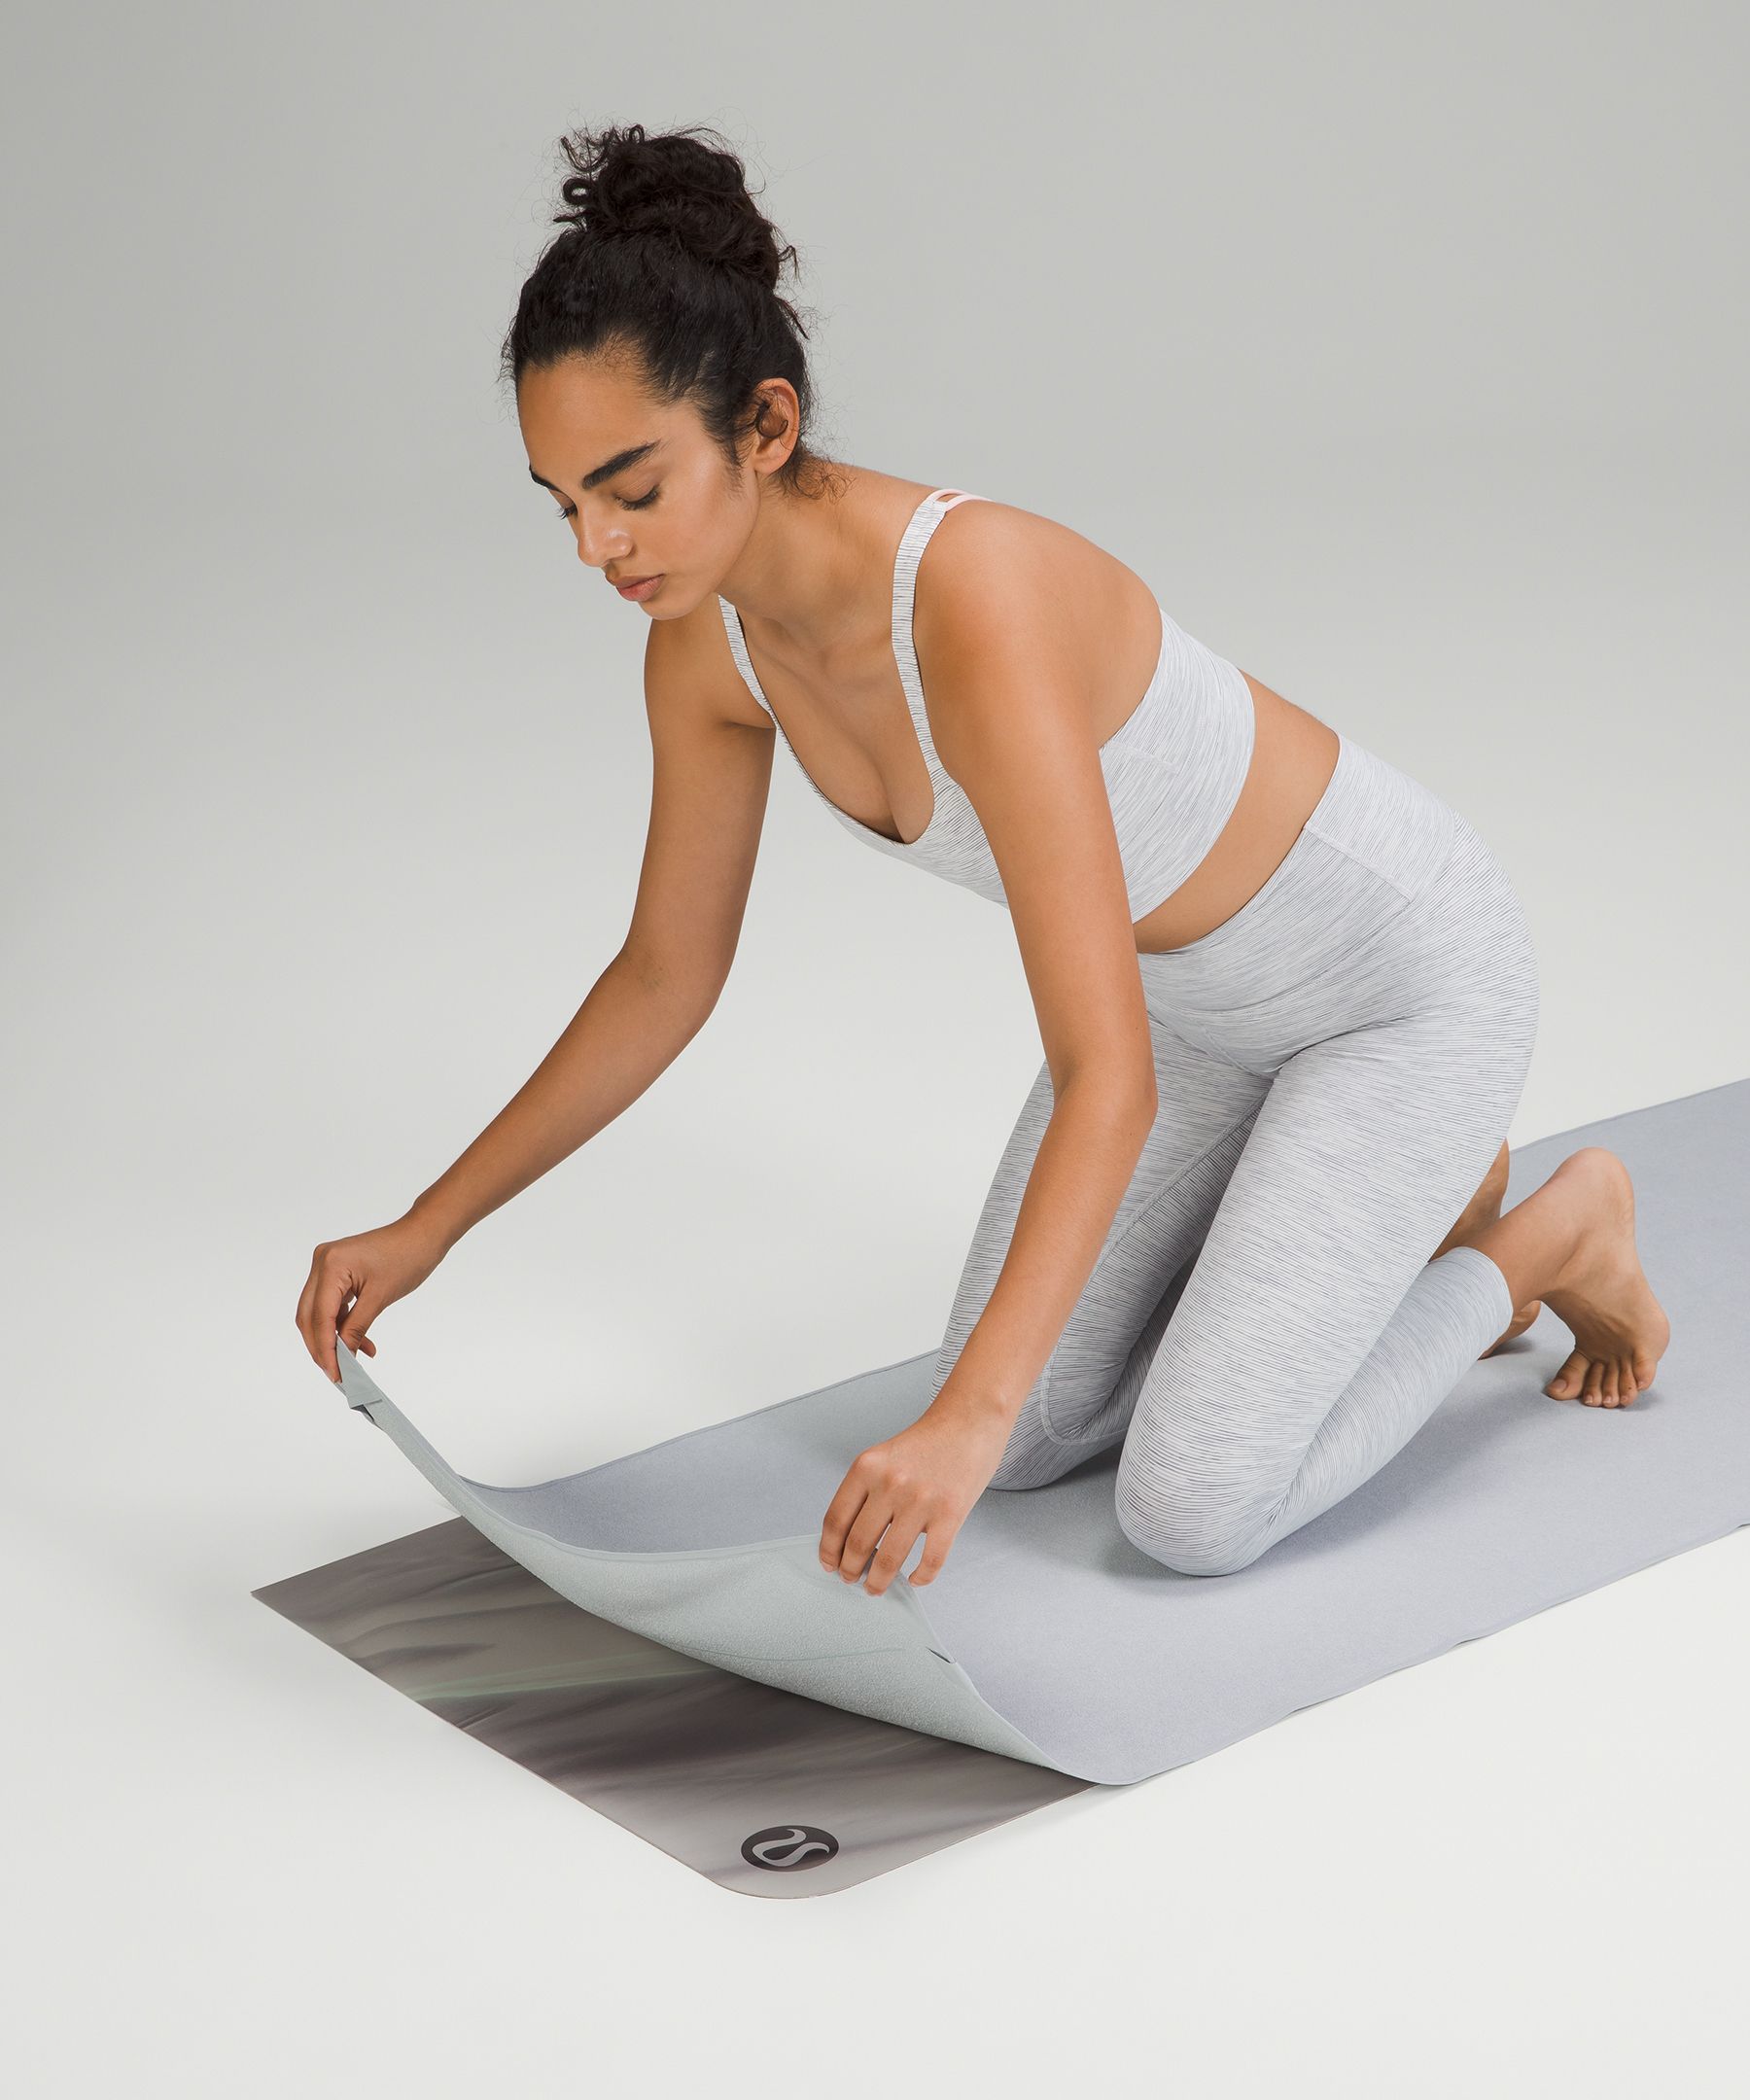 Yoga Mat Towel with Grip, Equipment